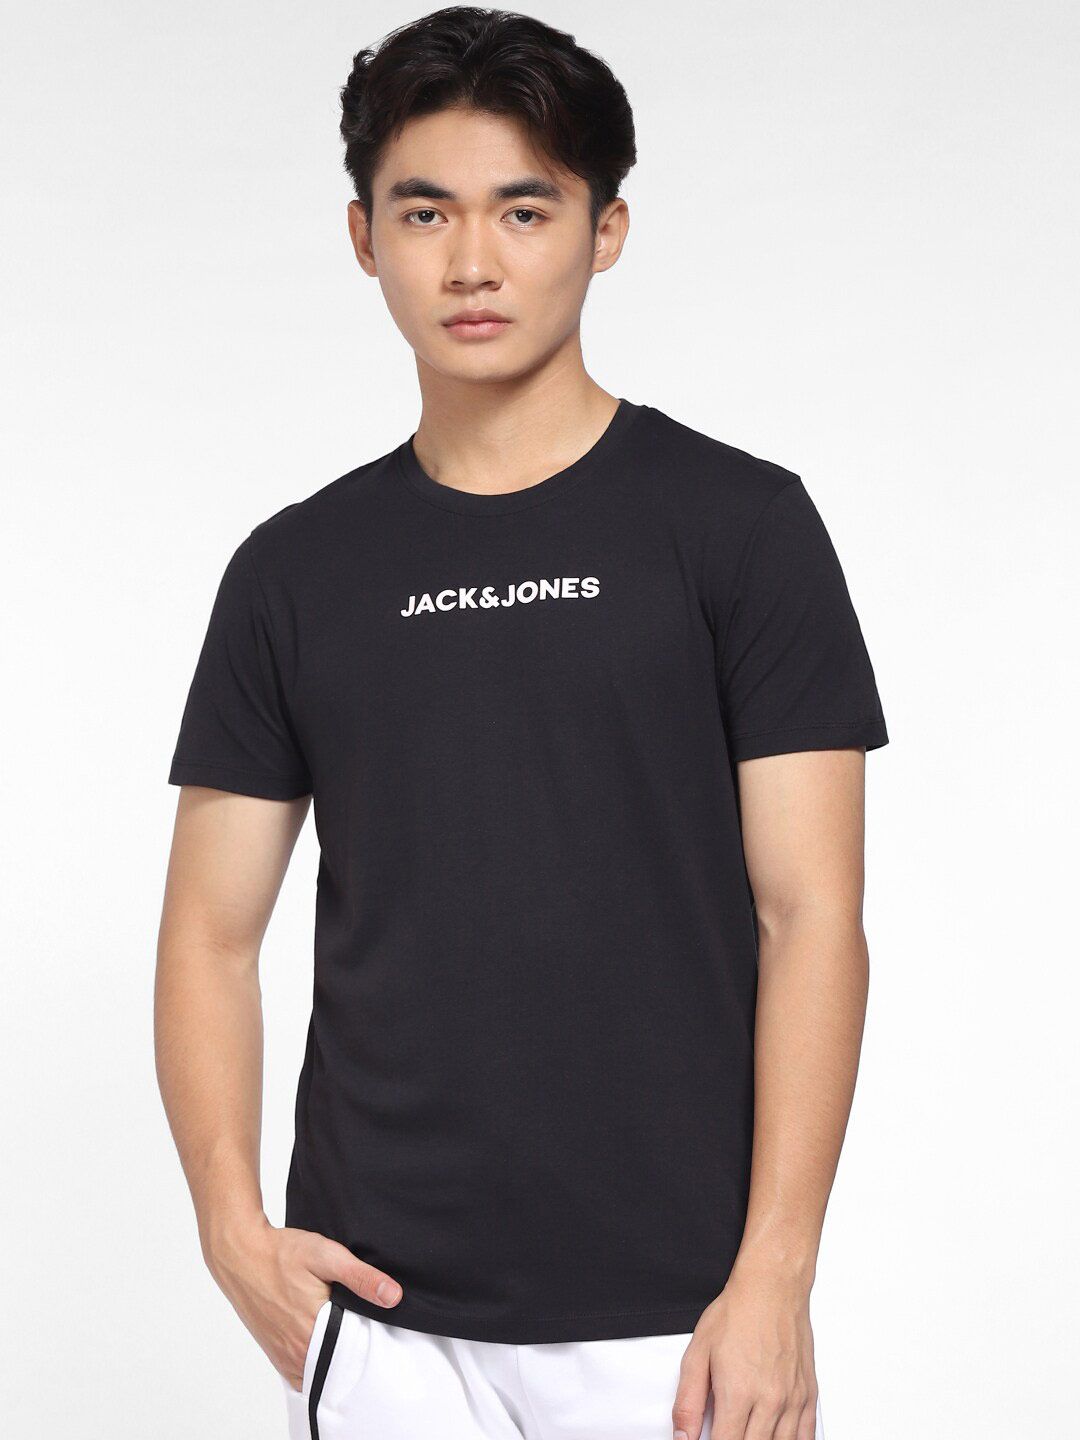 Jack & Jones Men Black Typography Printed Slim Fit Cotton T-shirt